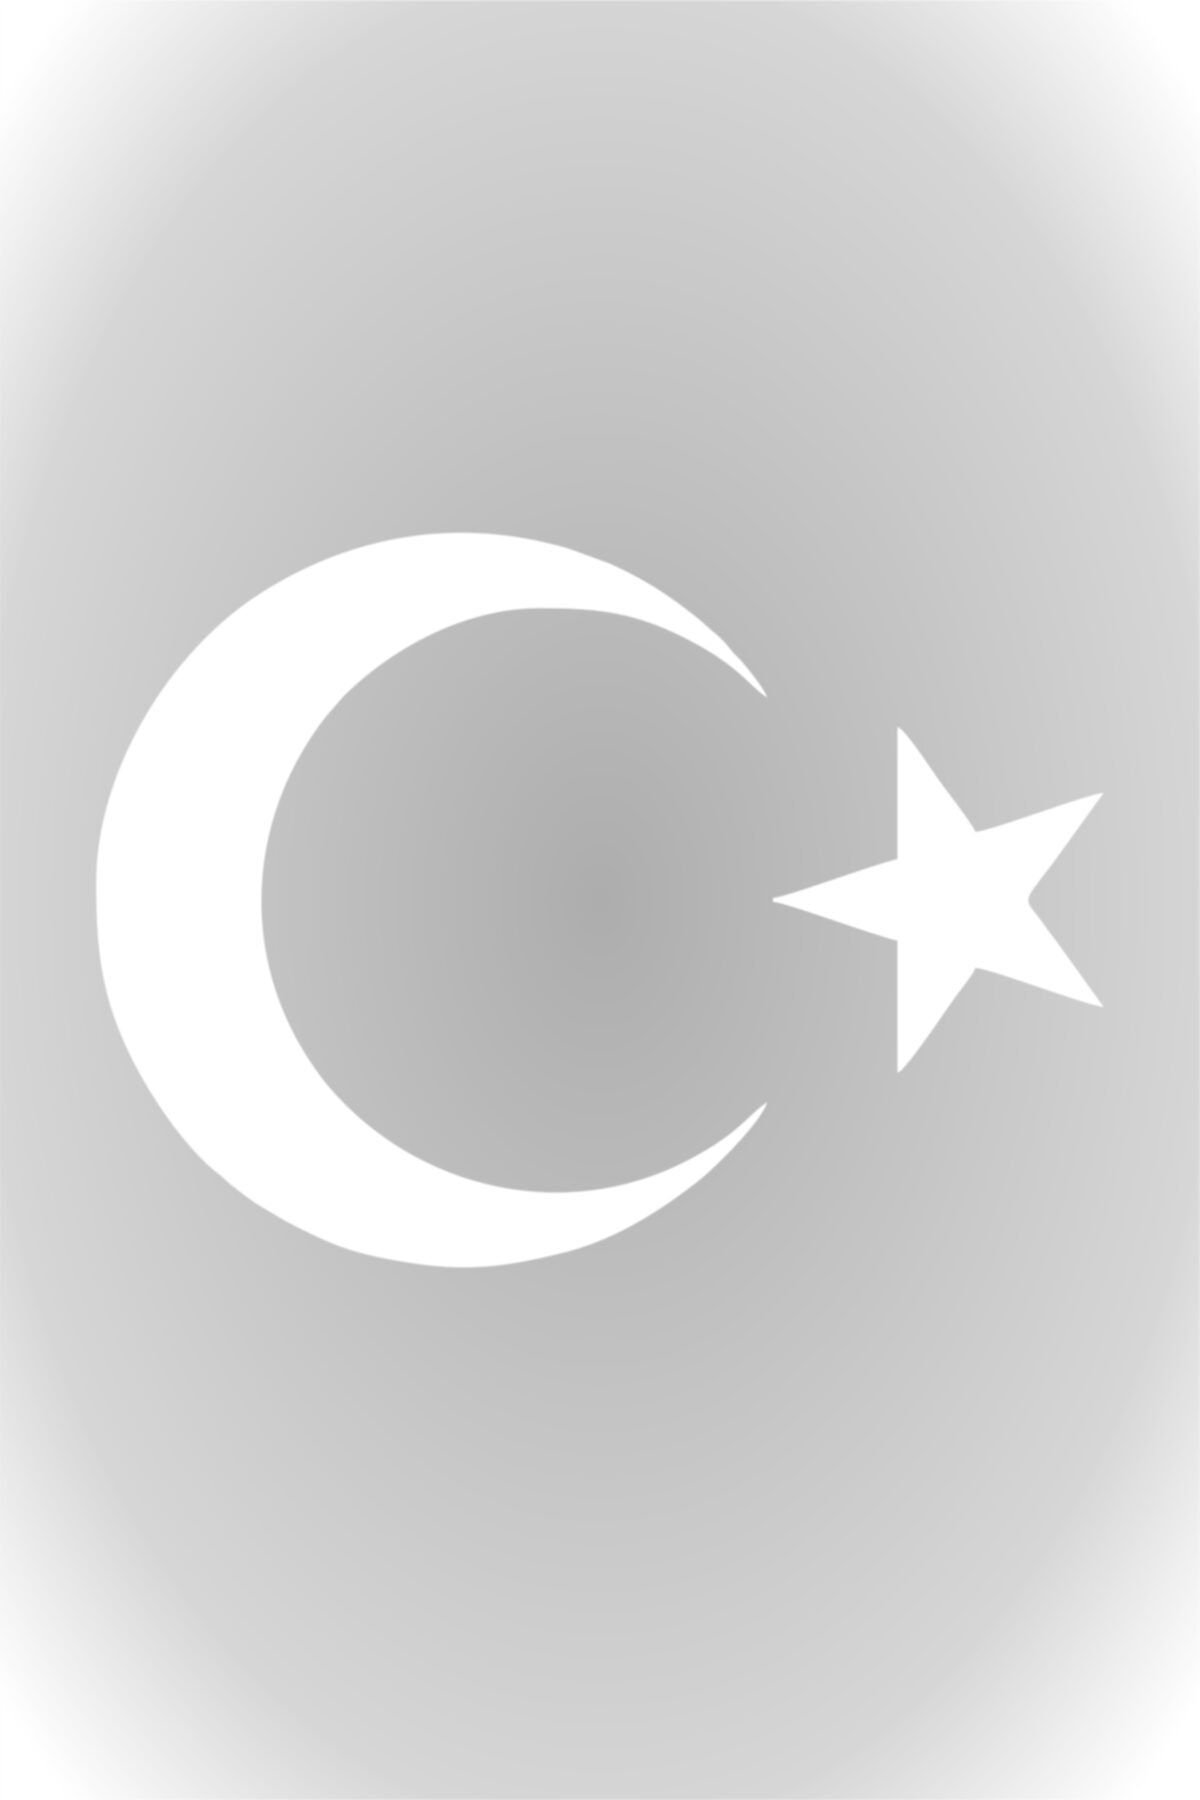 Quart Aksesuar 20 Cm Beyaz Ay Yıldız Sticker Türk Bayrağı Sticker